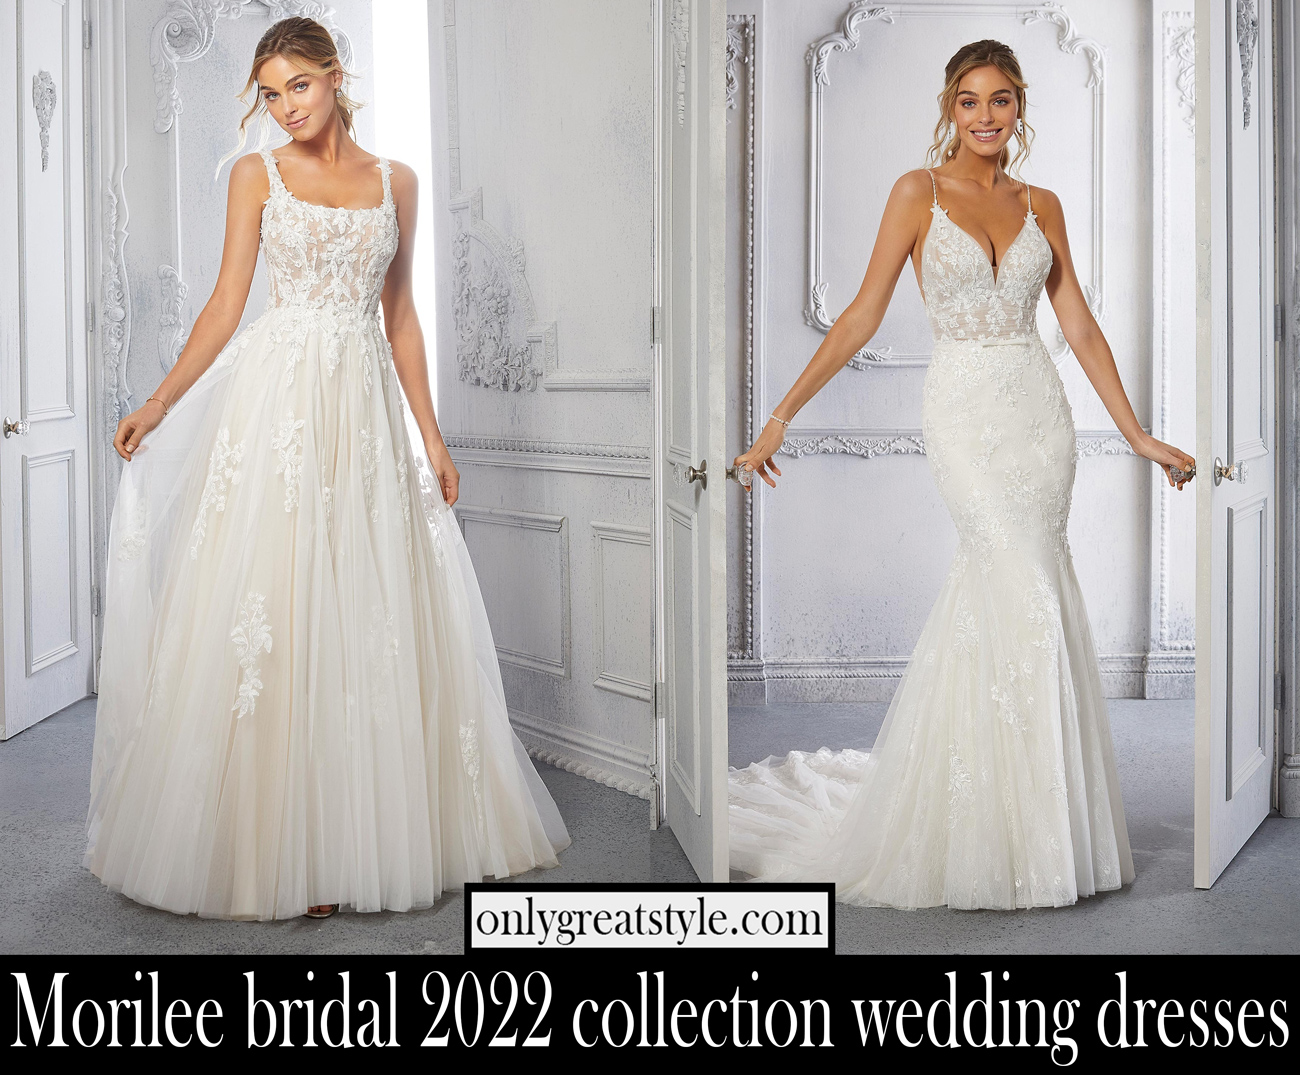 Morilee bridal 2022 collection wedding dresses